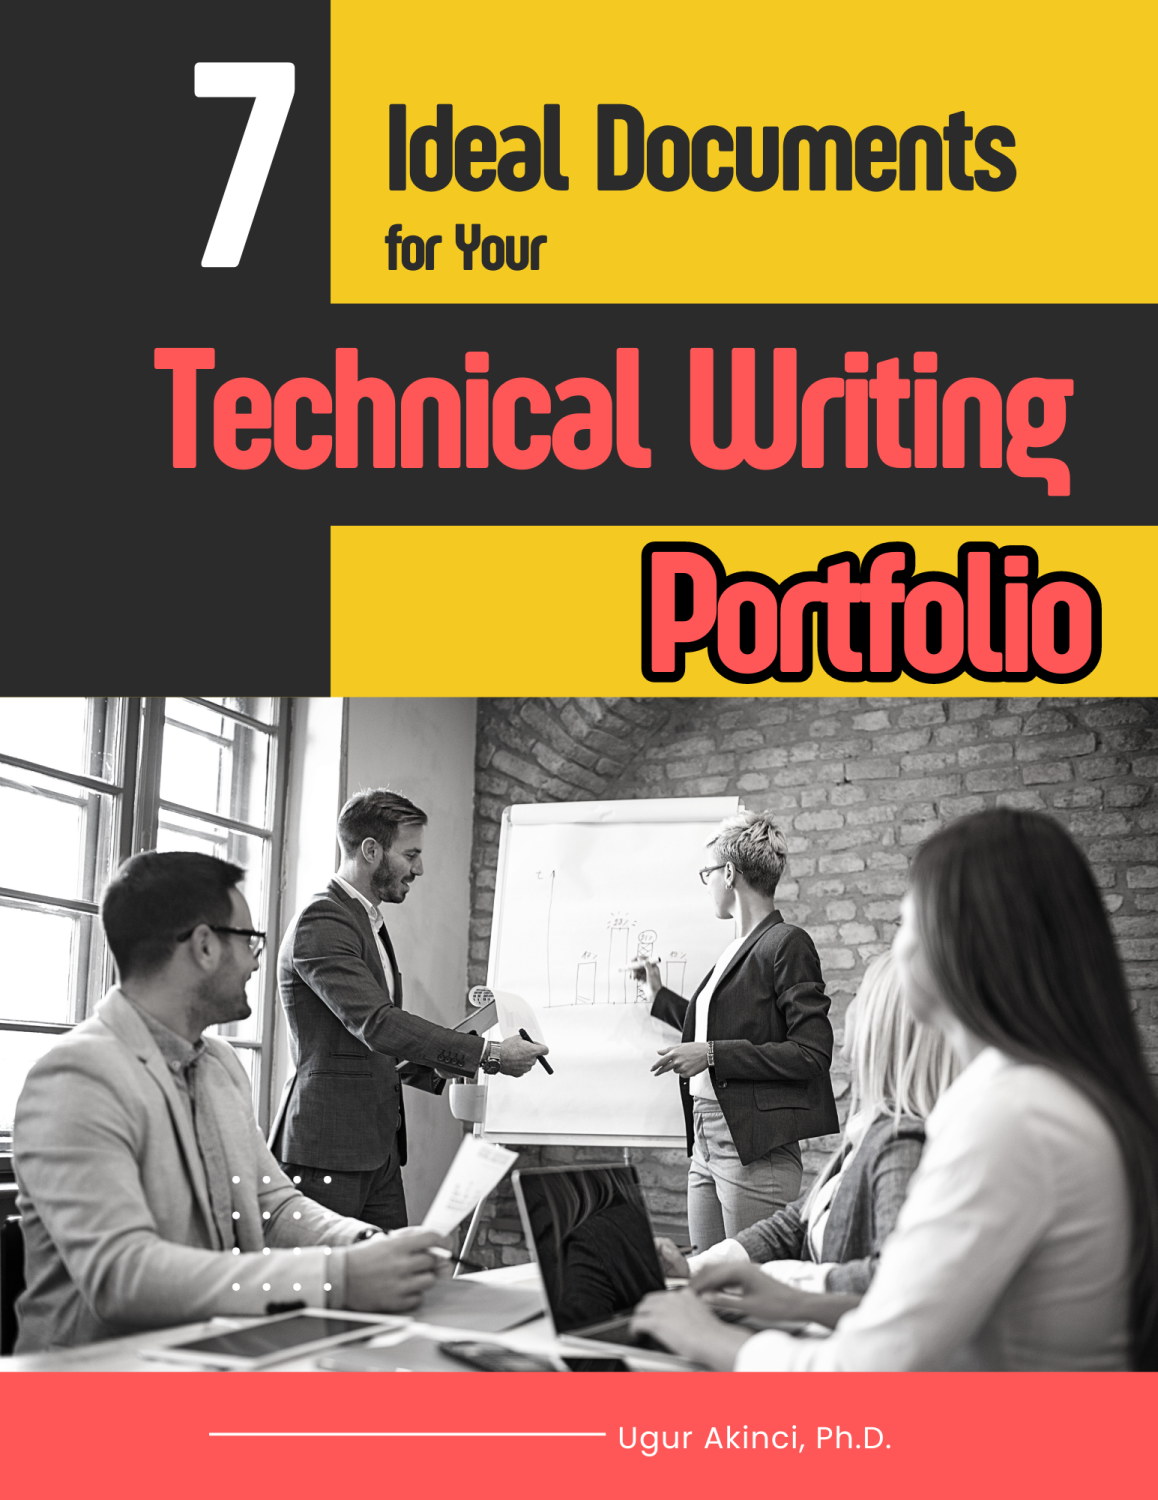 Create a PORTFOLIO as a Technical Writer